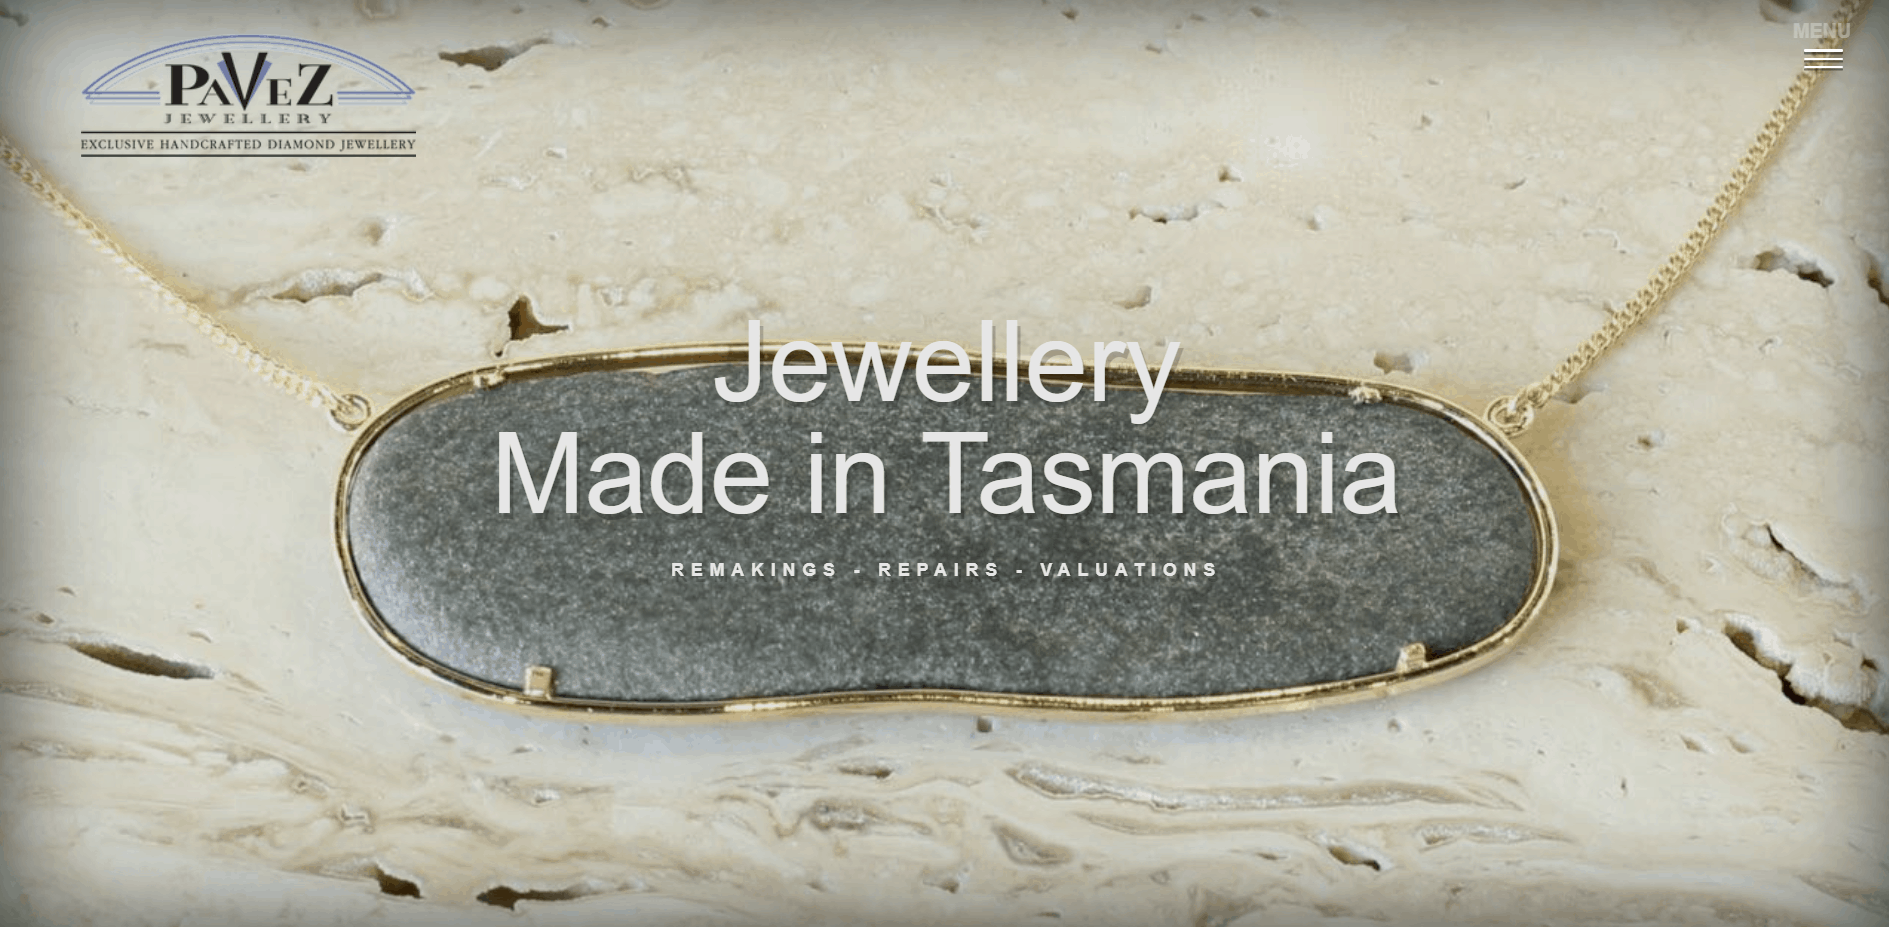 Pavez Tasmanian Jeweller